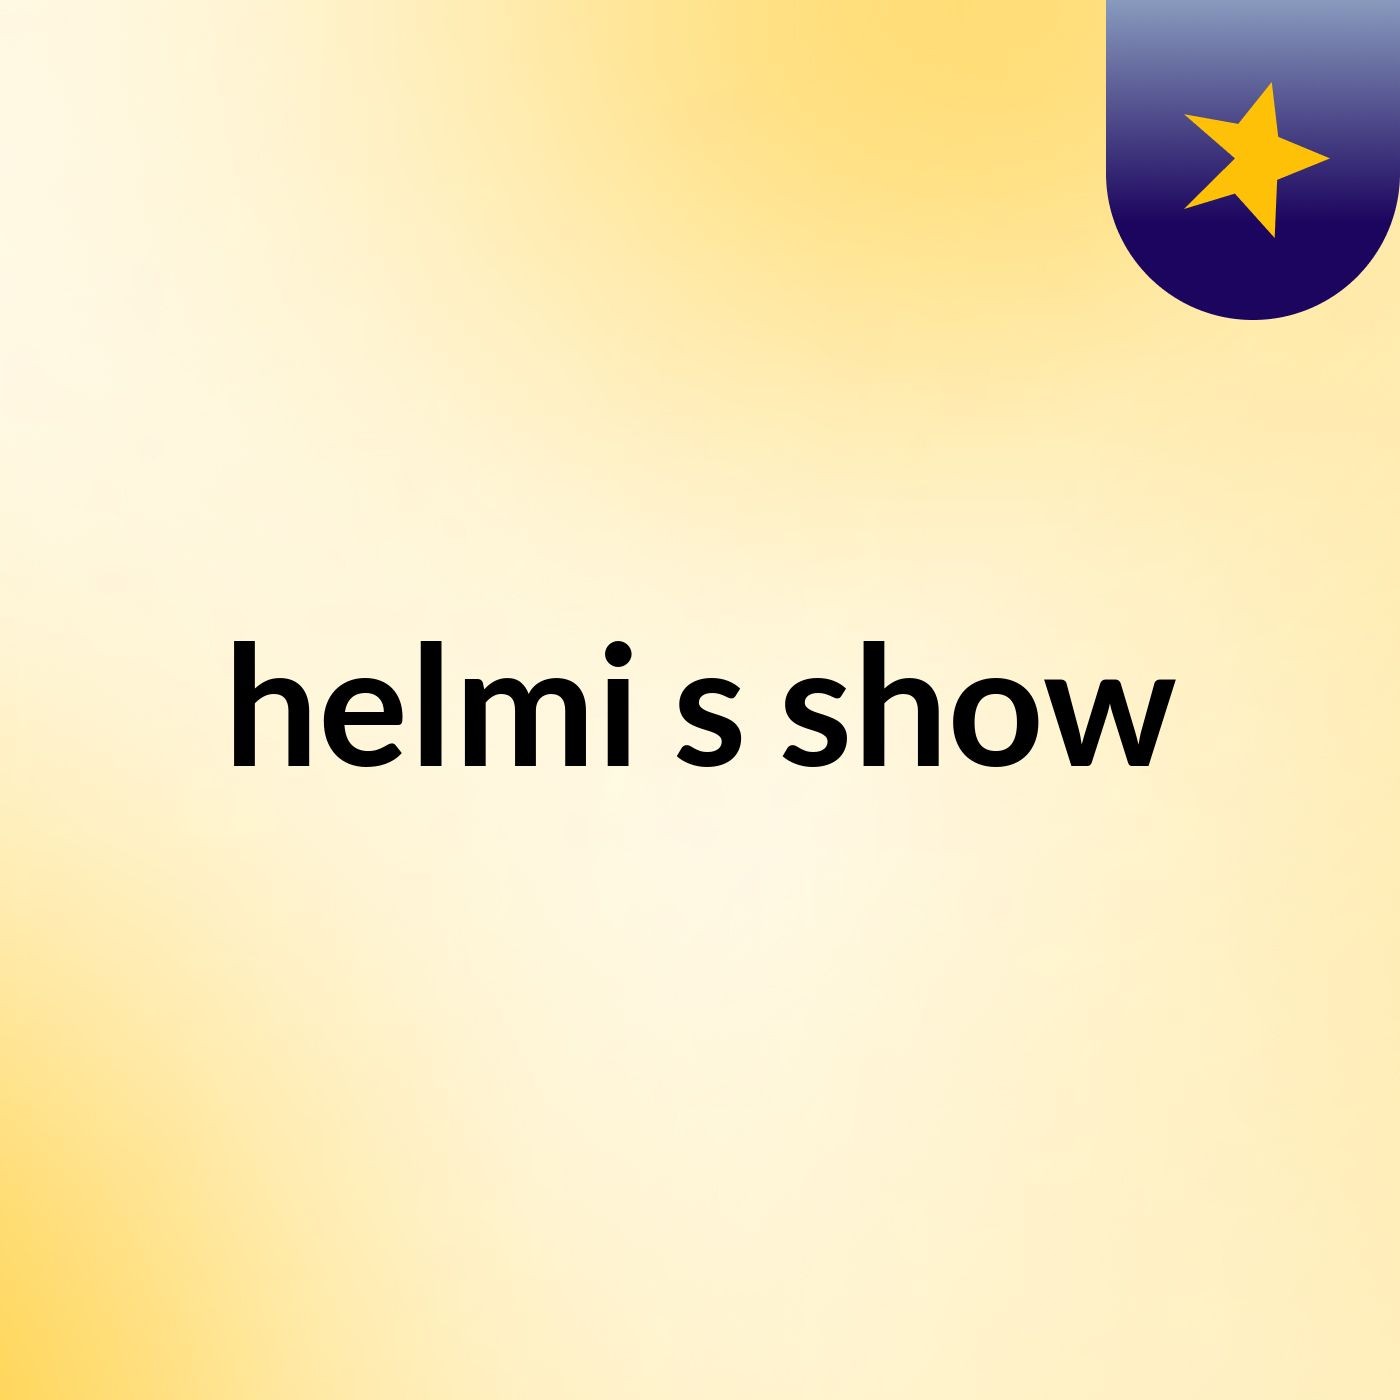 helmi's show